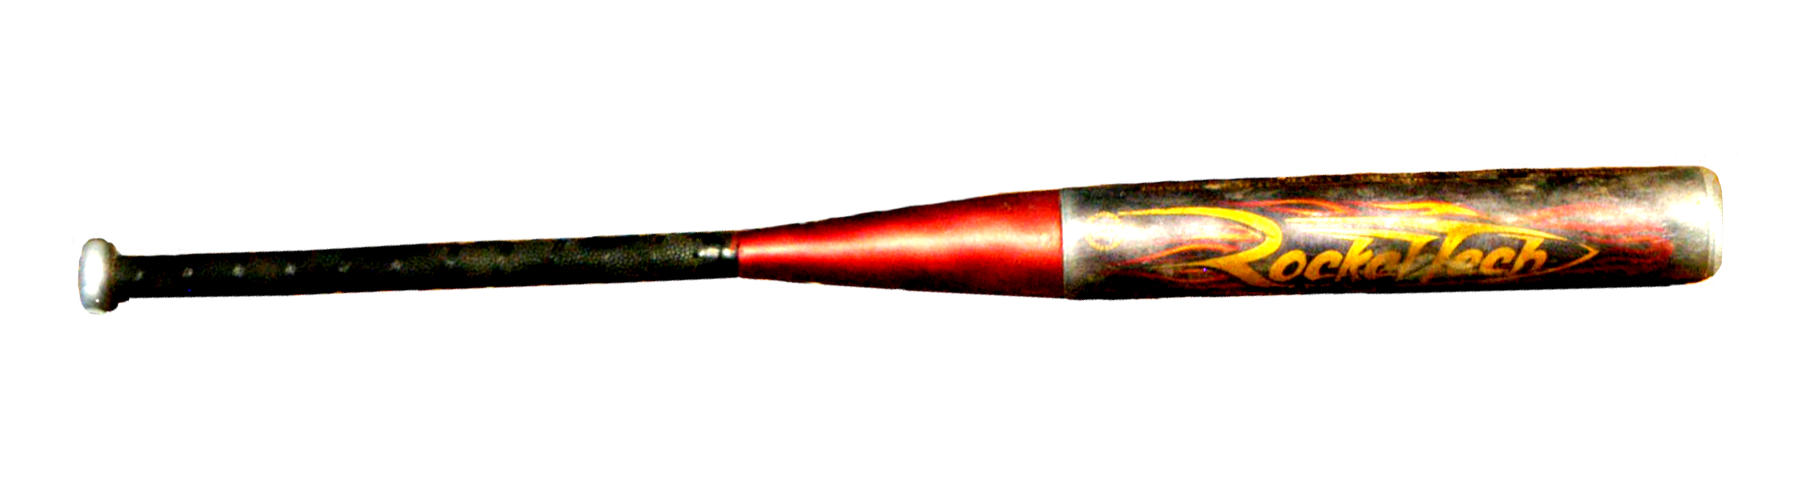 baseball bat clipart red bat